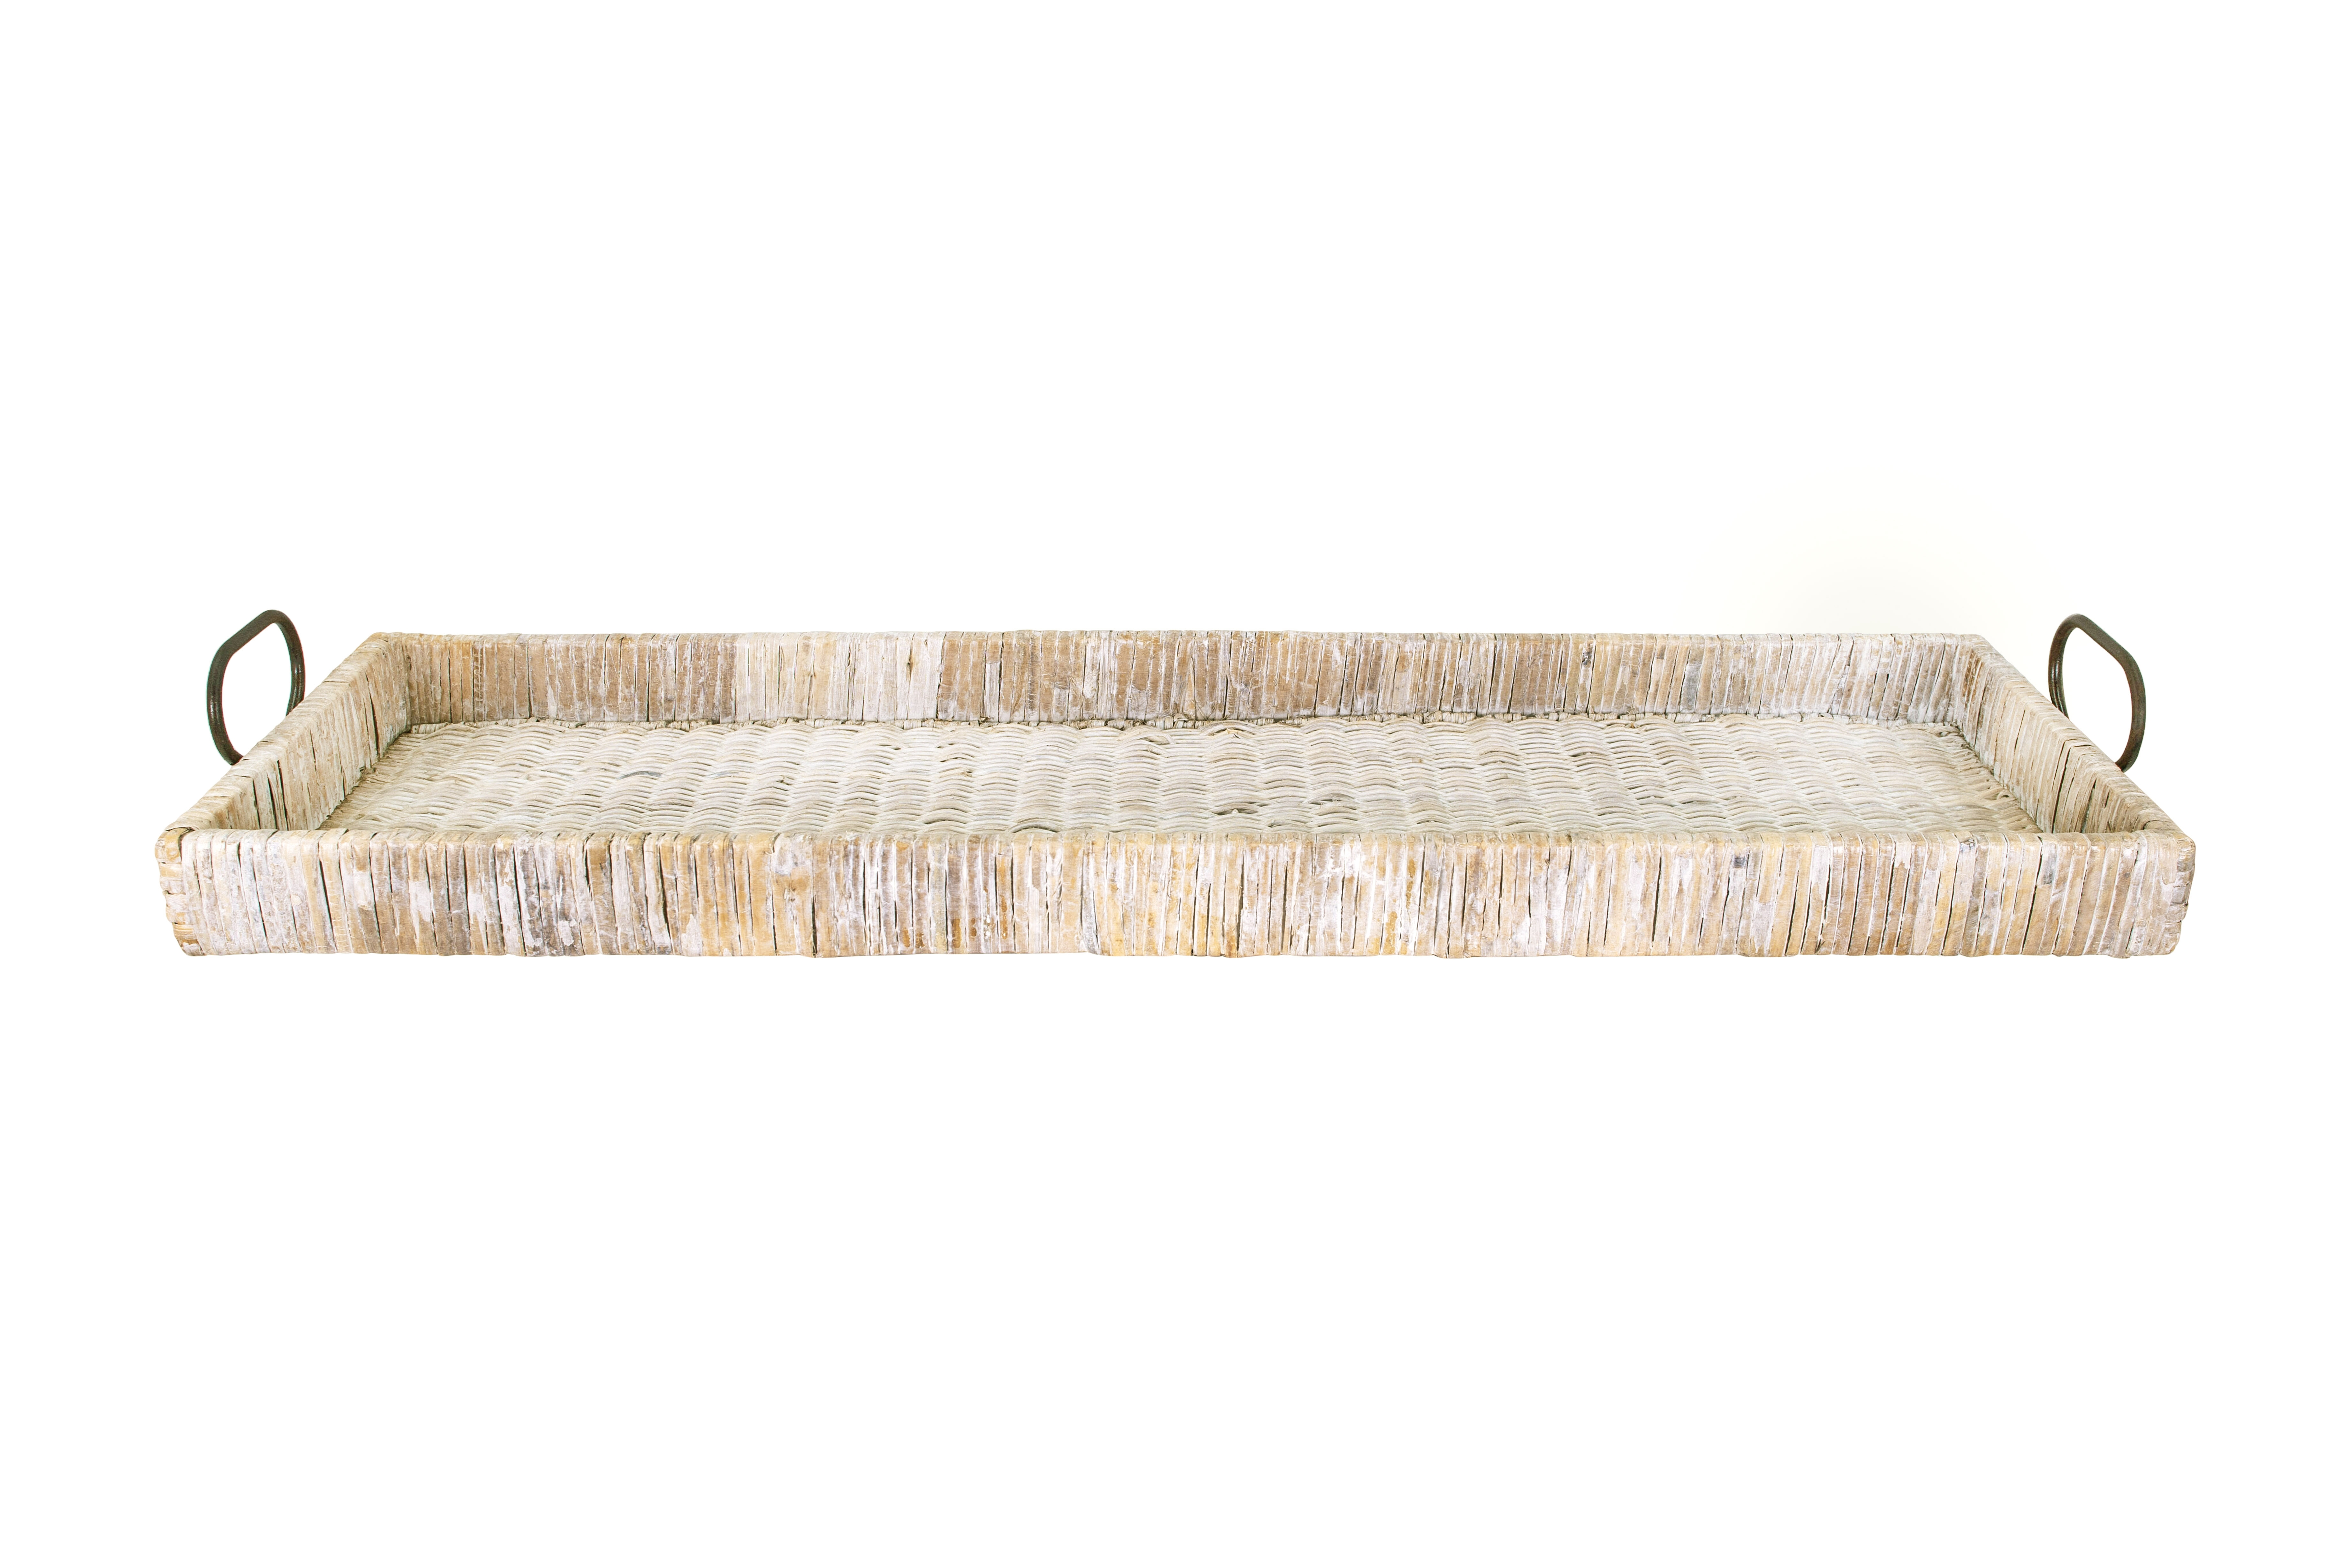 Oversize Decorative Tan Rattan Tray with Metal Handles - Image 0